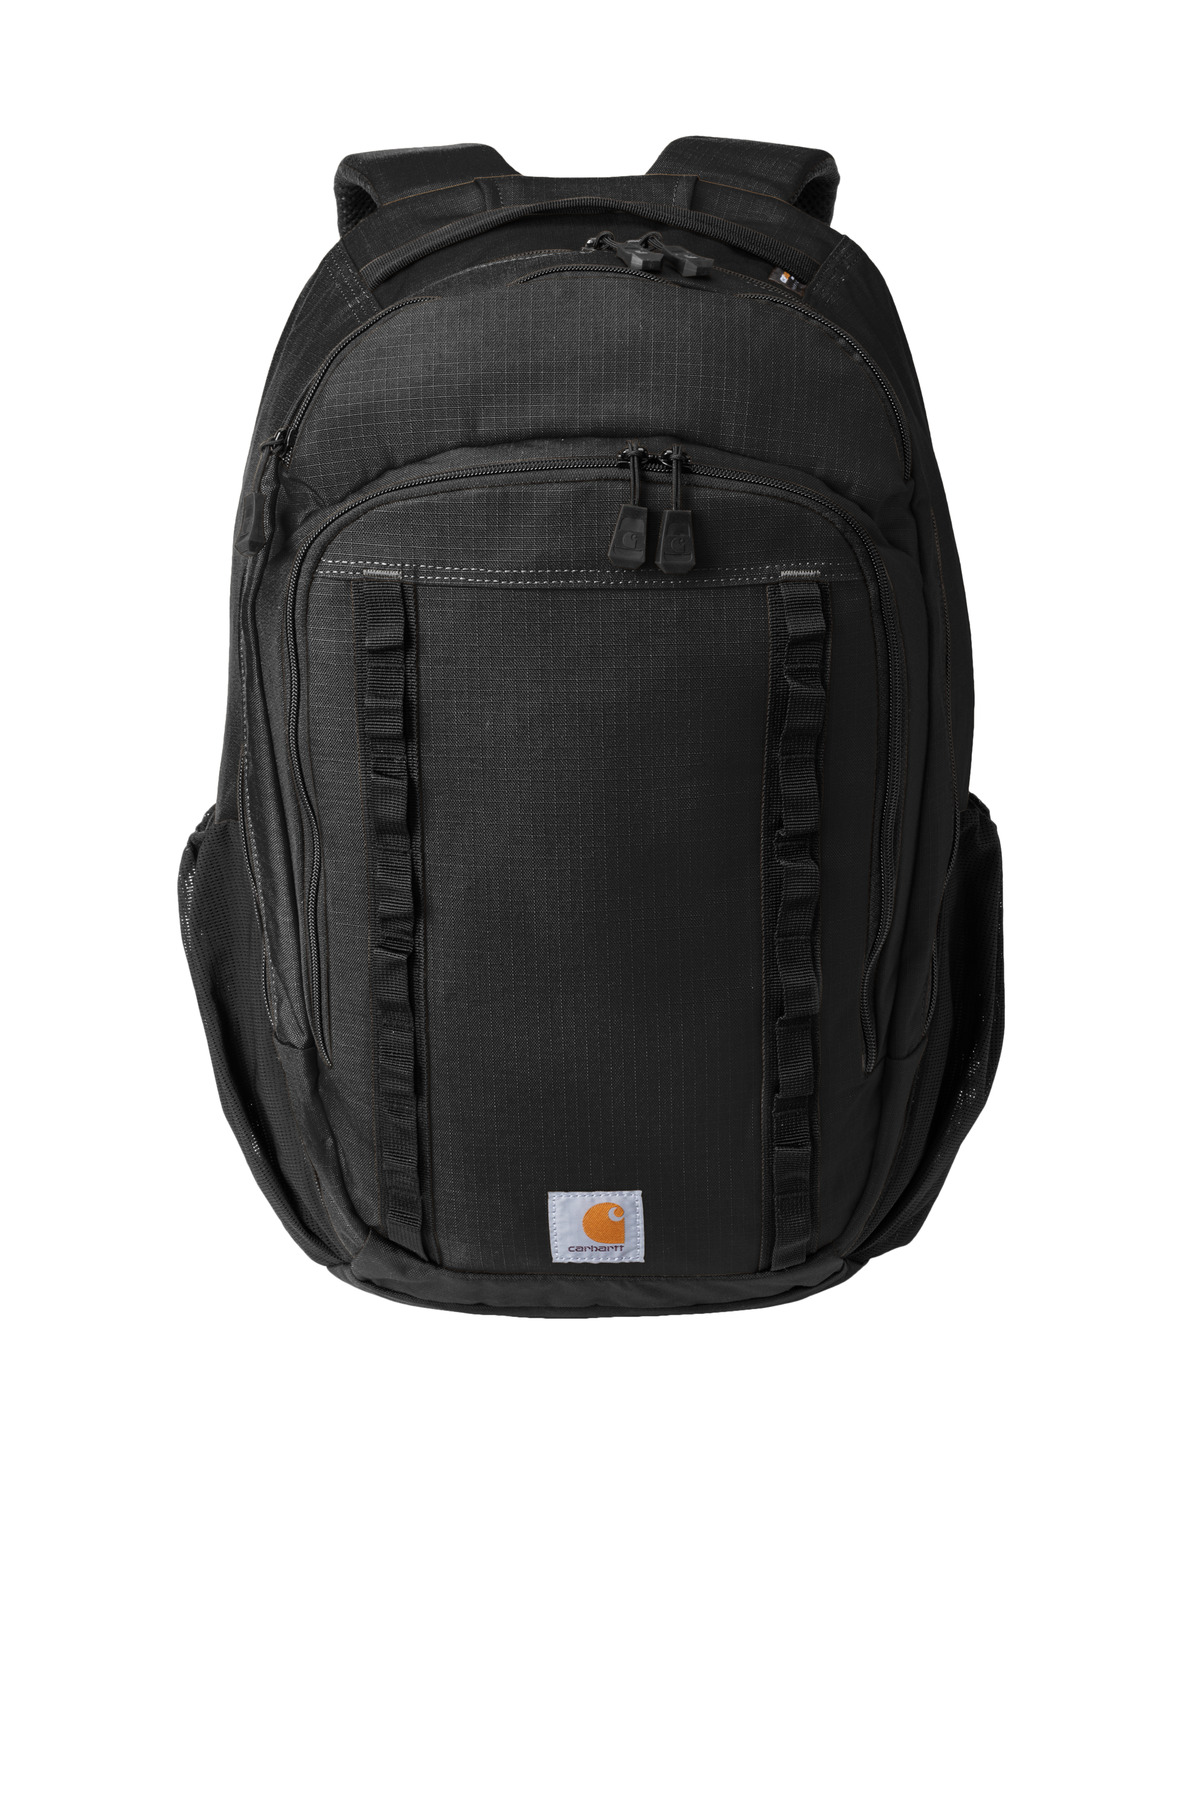 Buy Carhartt 25L Ripstop Backpack - Carhartt Online at Best price - CA